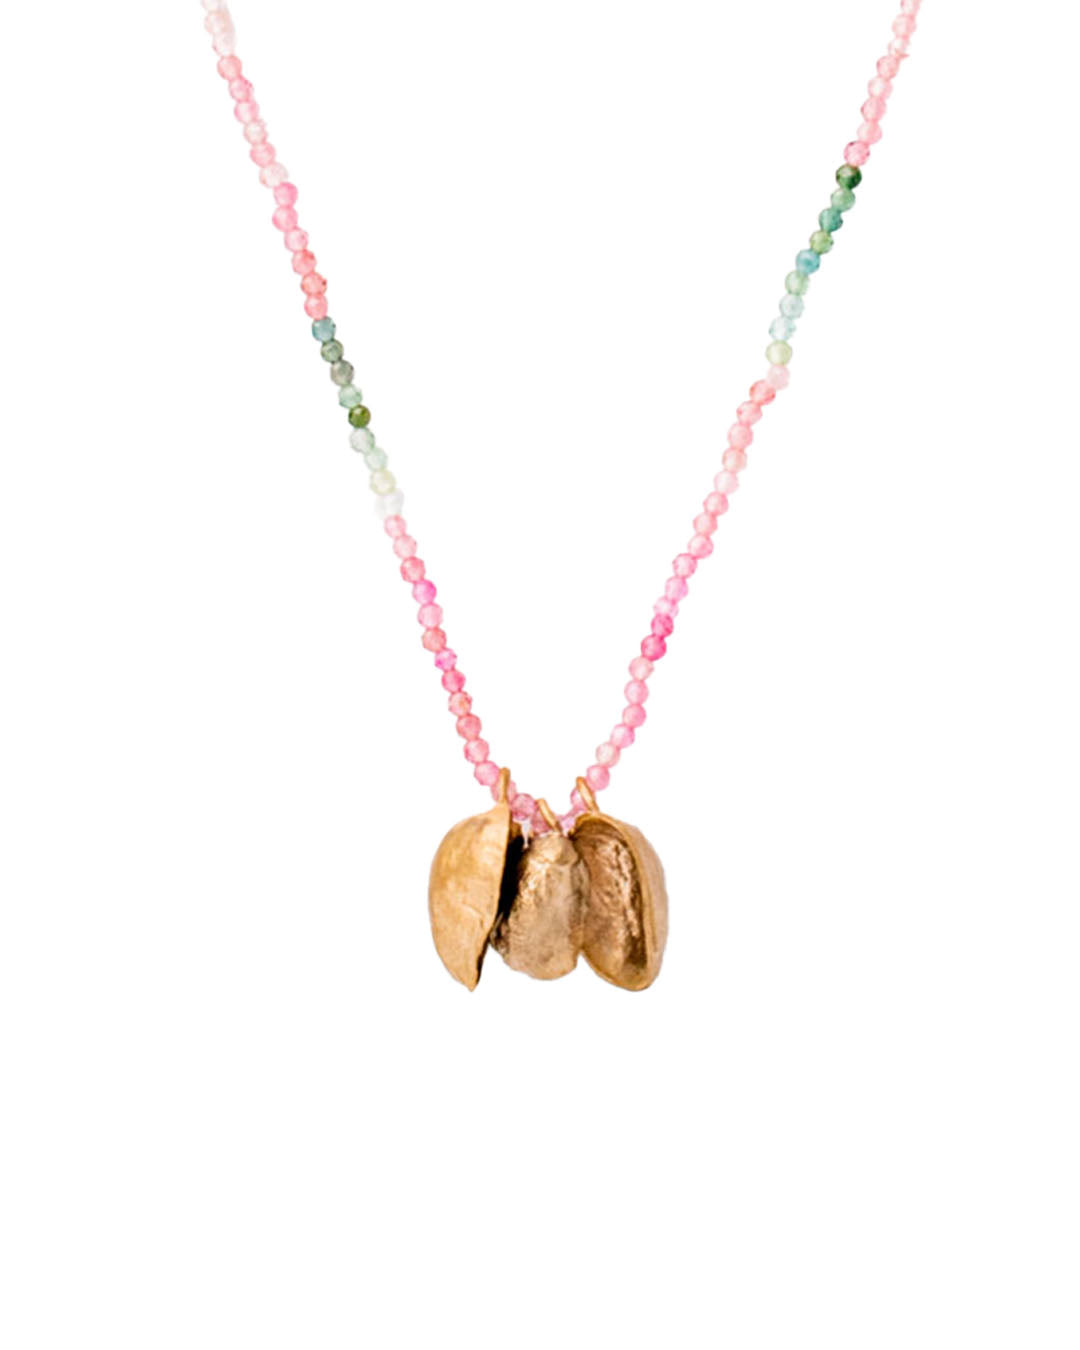 Handmade necklace - real nut cast - bronze and gemstones - Mandala T.